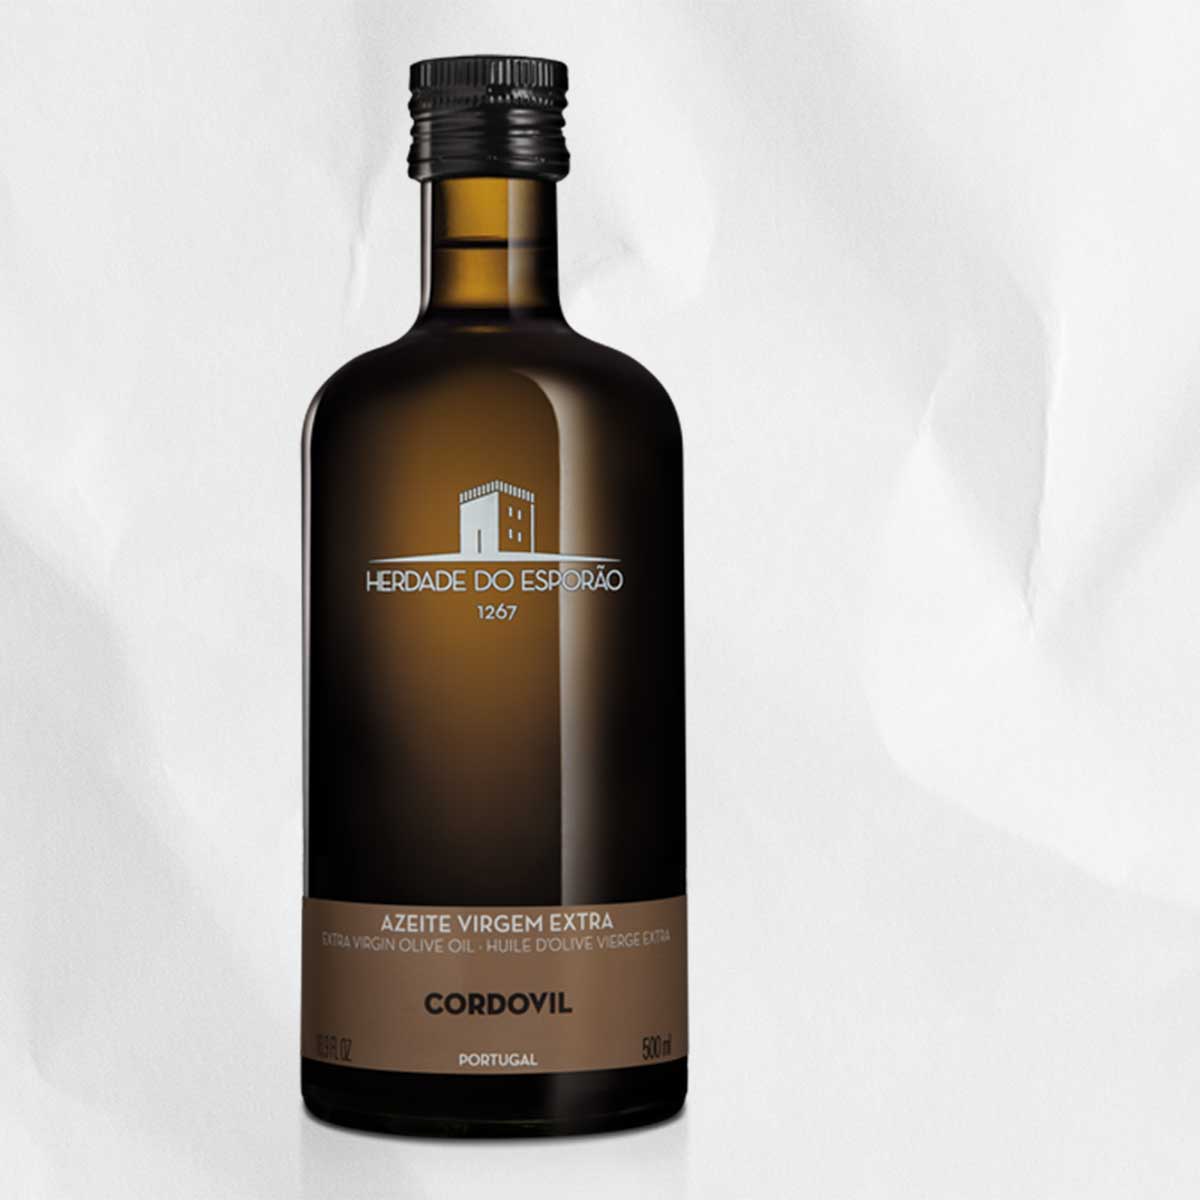 A bottle of Herdade do Esporao Cordovil Olive Oil